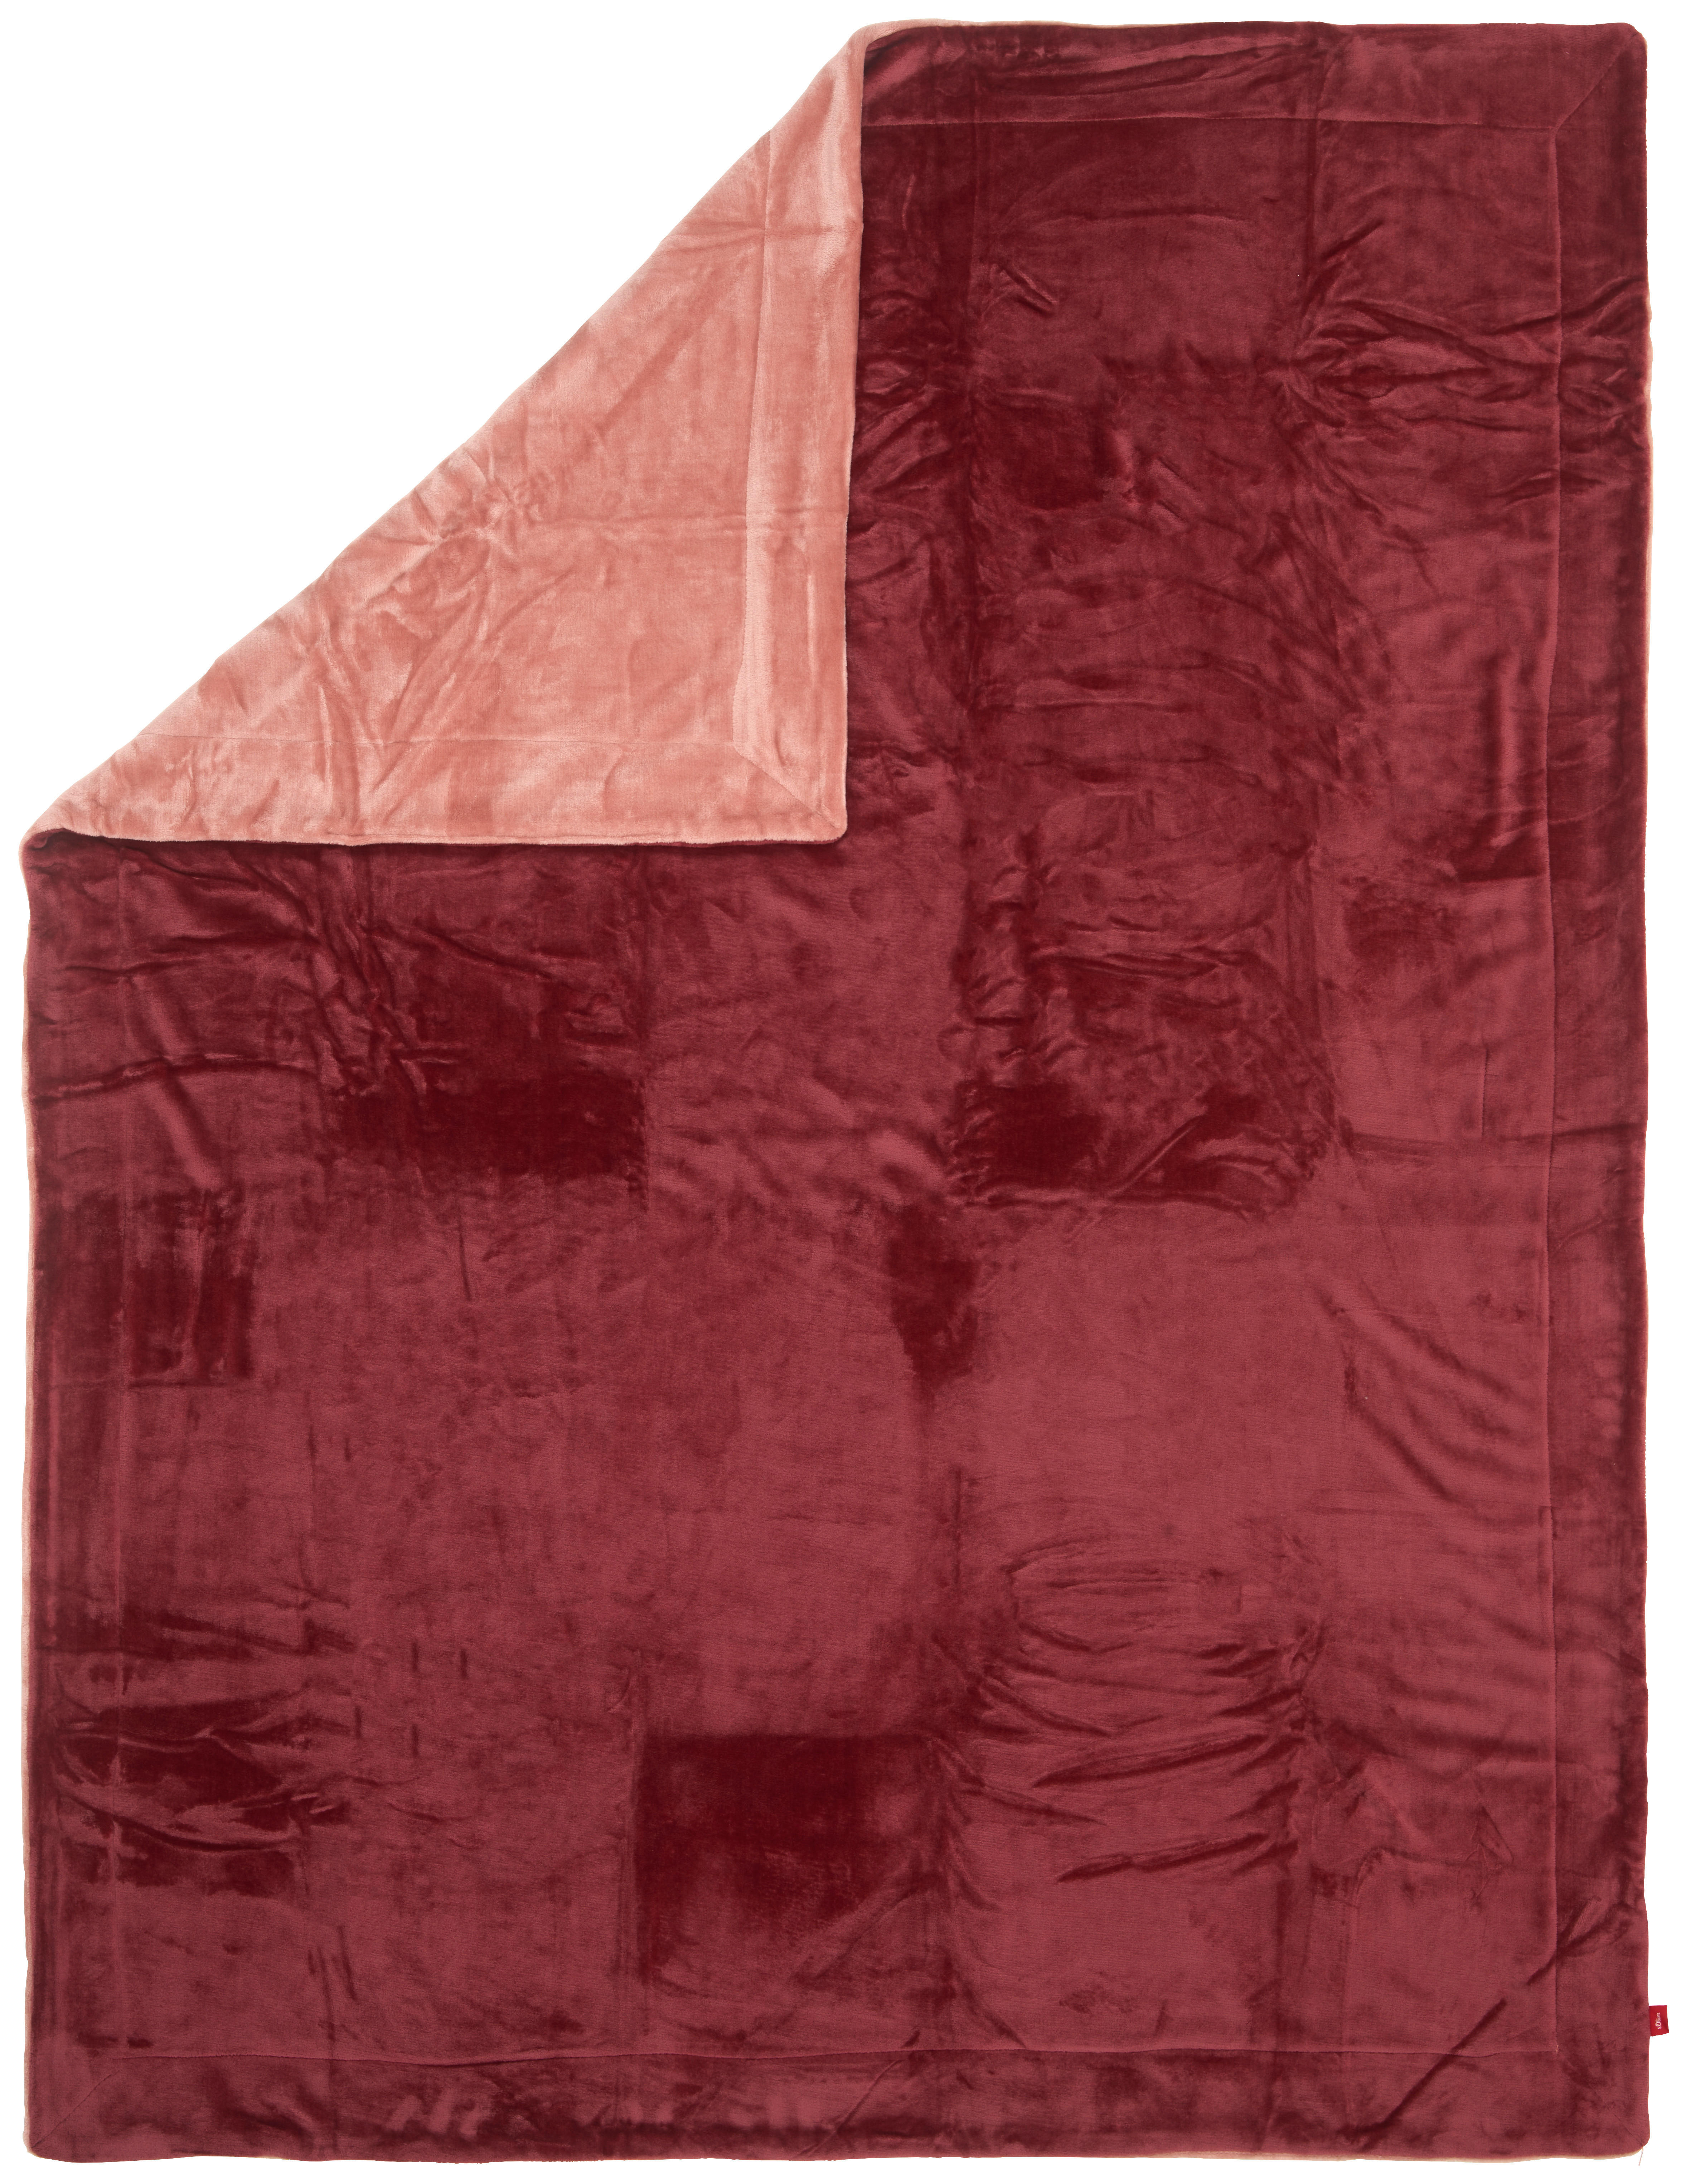 DECKE S.OLIVER 1280-500 150/200 cm Rot, Bordeaux  - Bordeaux/Rot, KONVENTIONELL, Textil (150/200cm) - S. Oliver